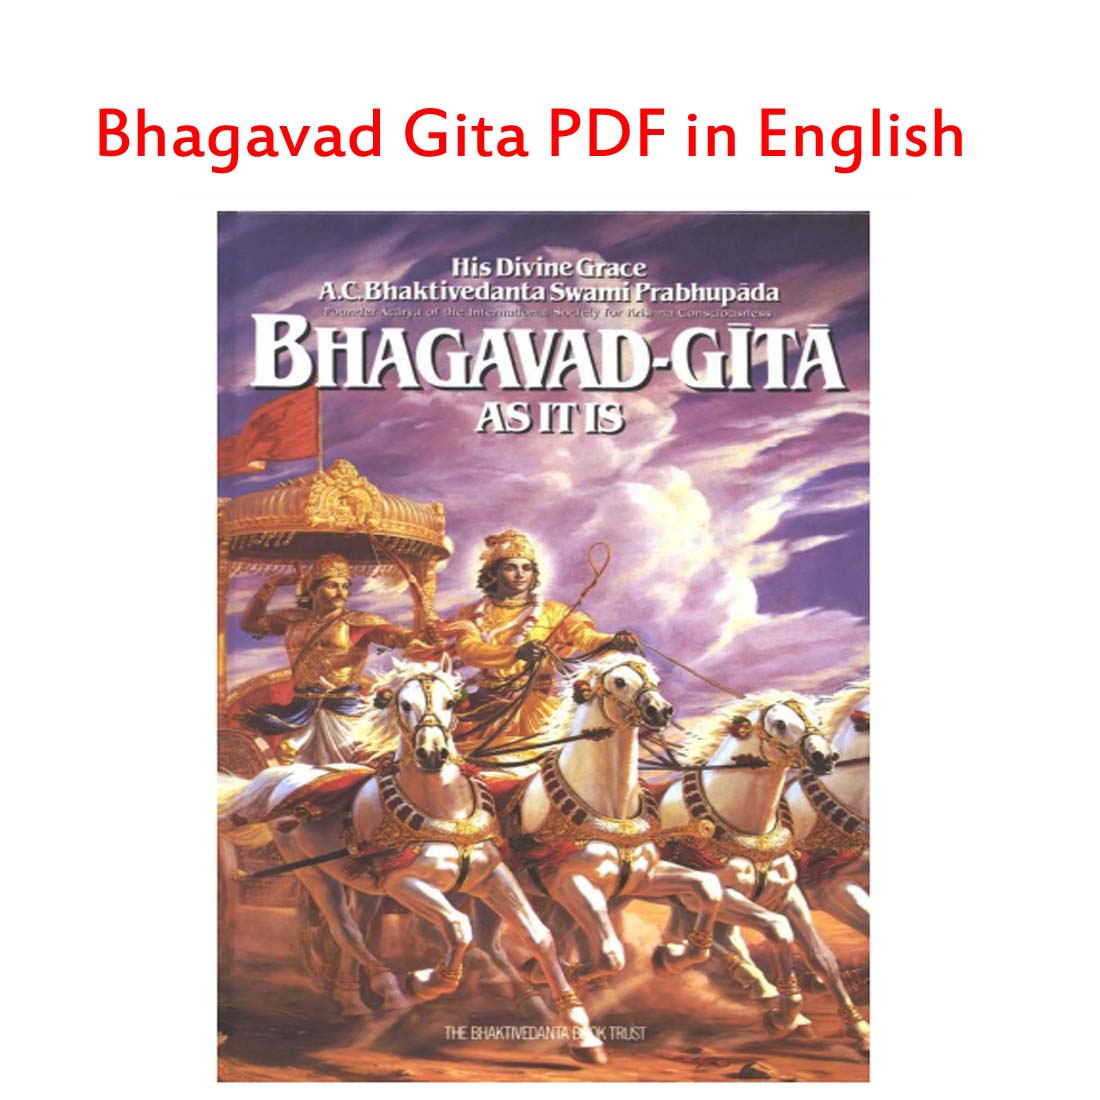 Bhagavad Gita PDF in English cover image.